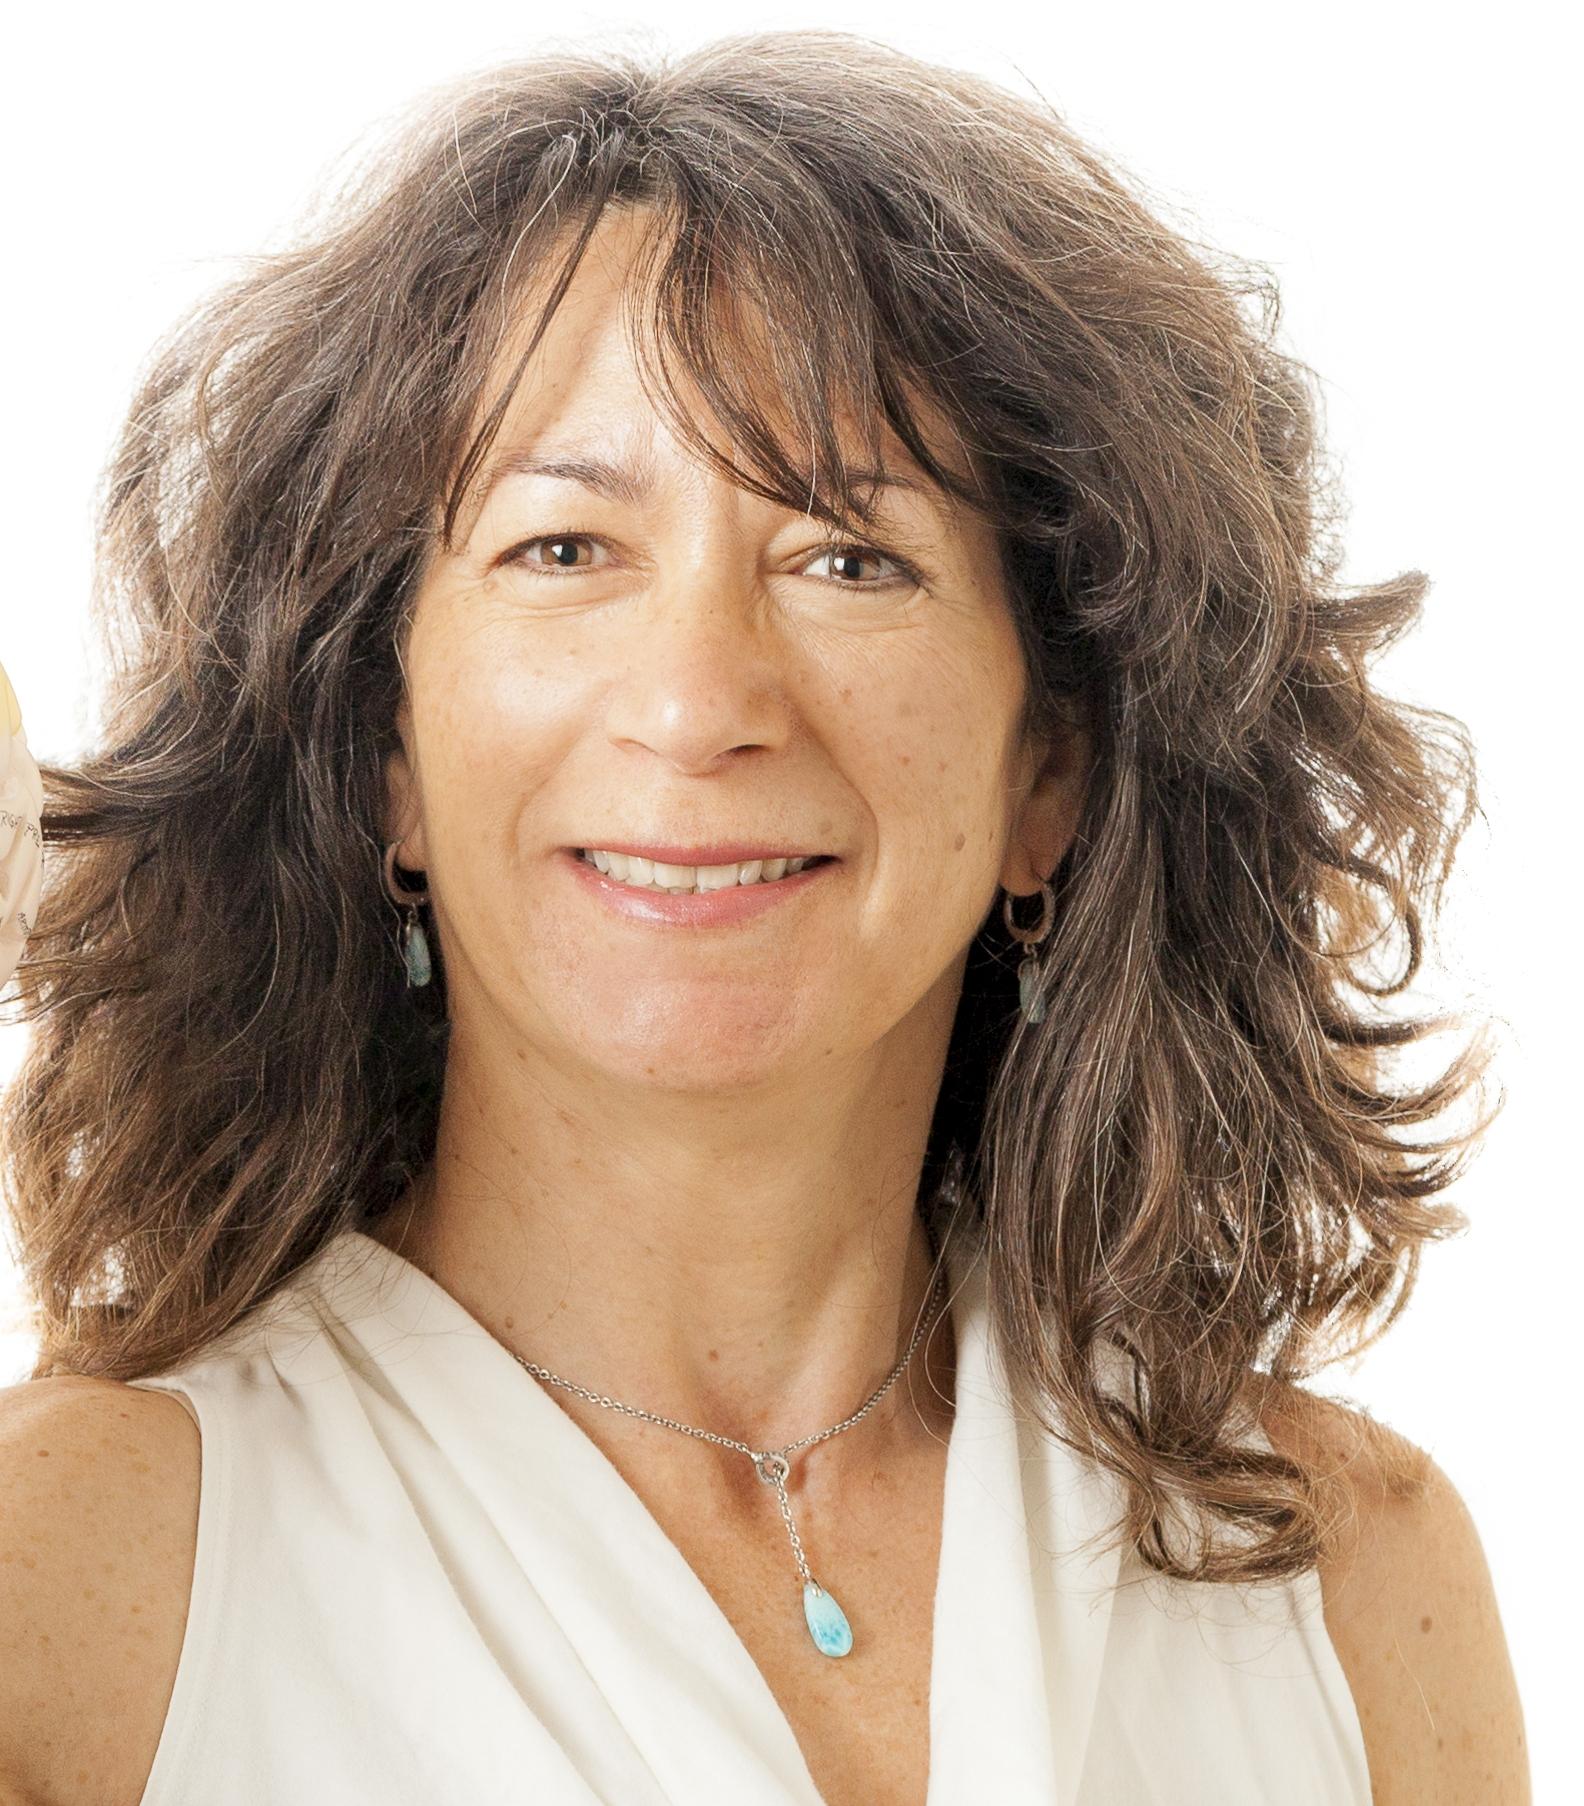 Professor Natalie Phillips, PhD